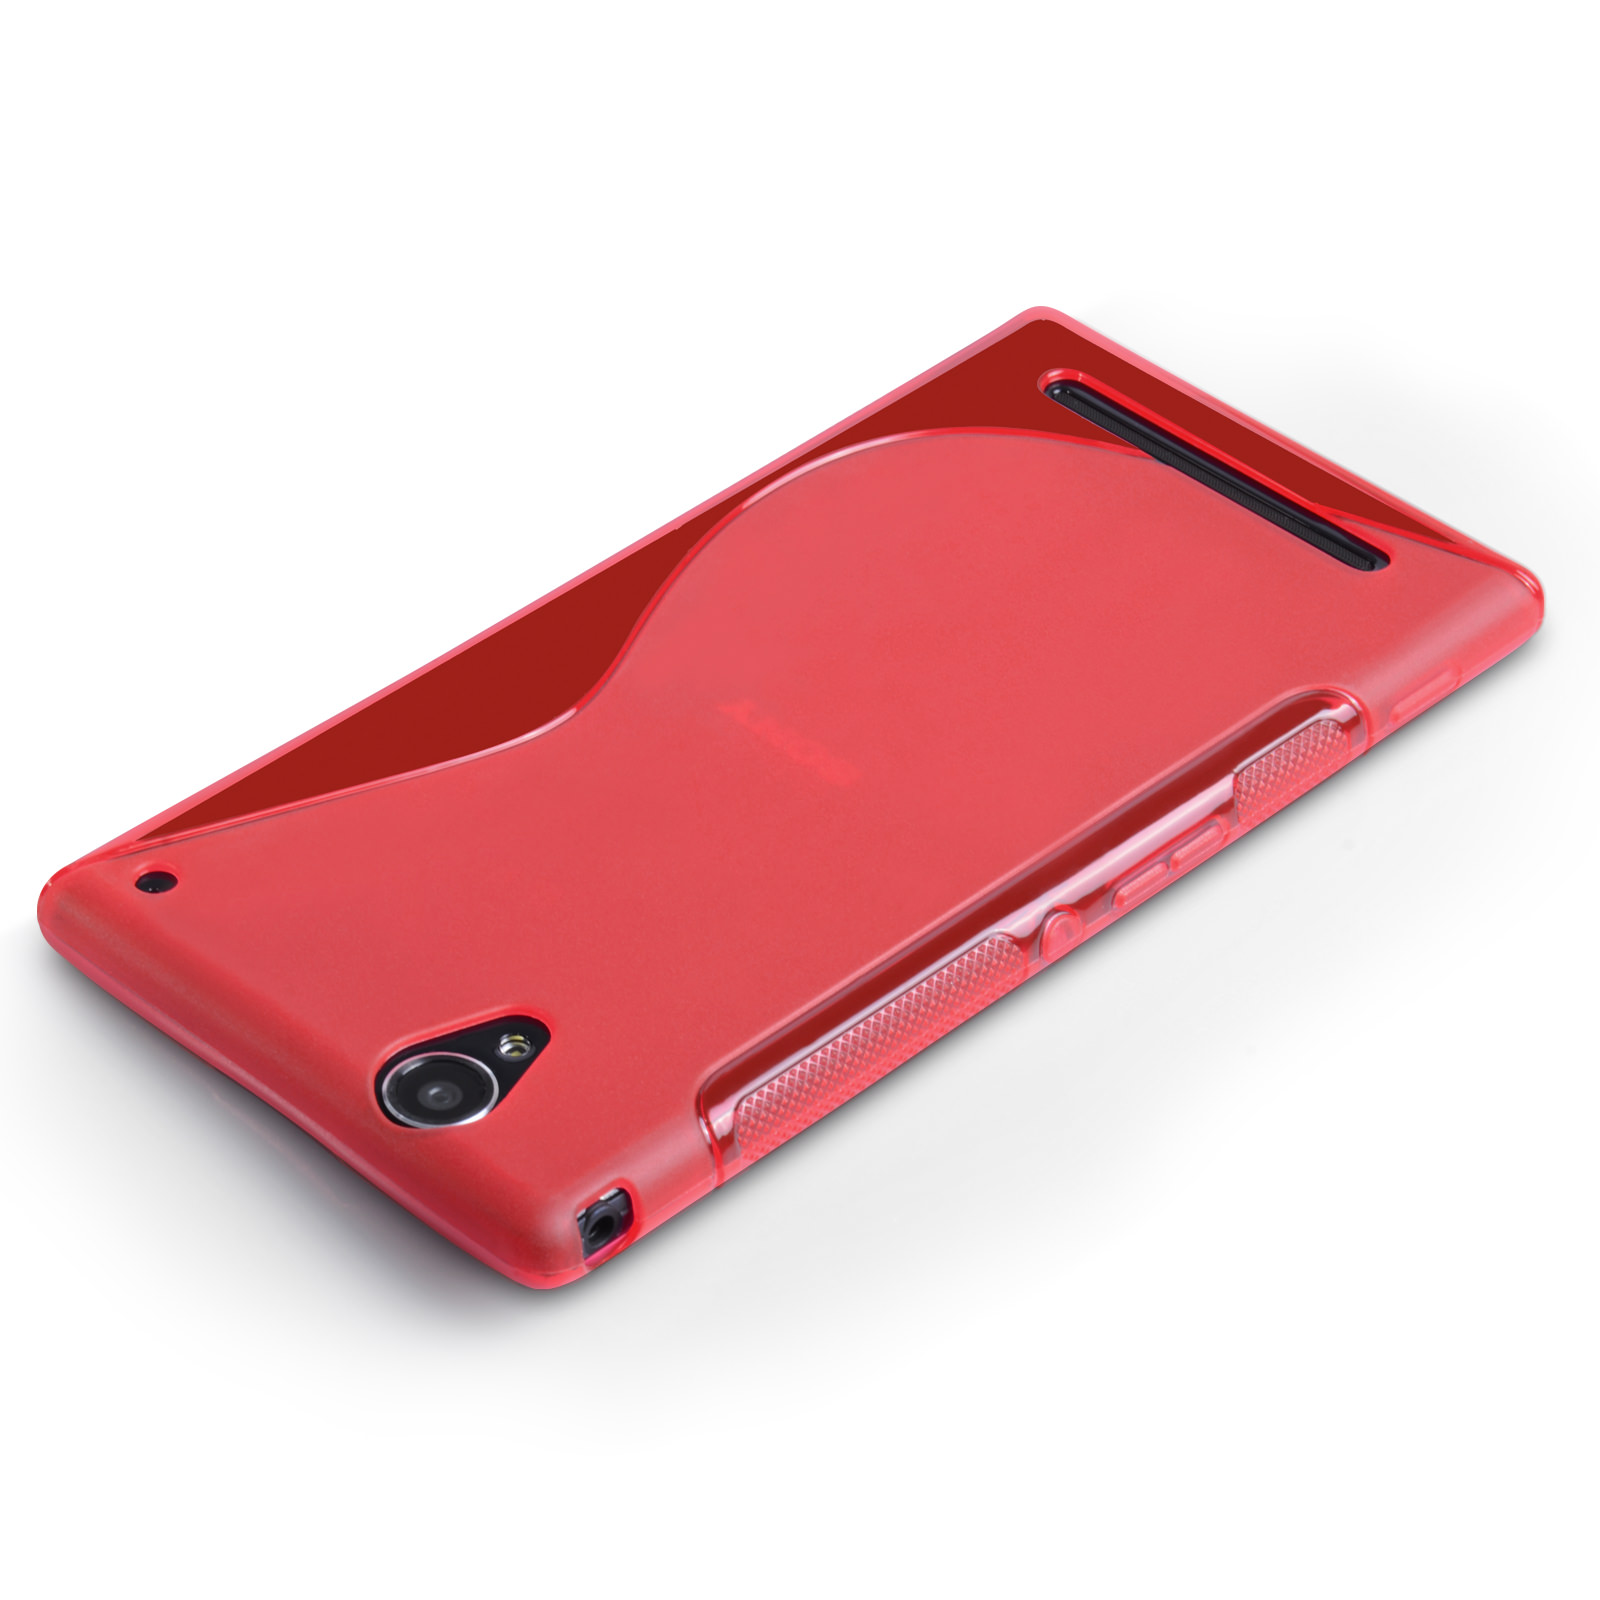 Caseflex Sony Xperia T2 Ultra Silicone Gel S-Line Case - Red